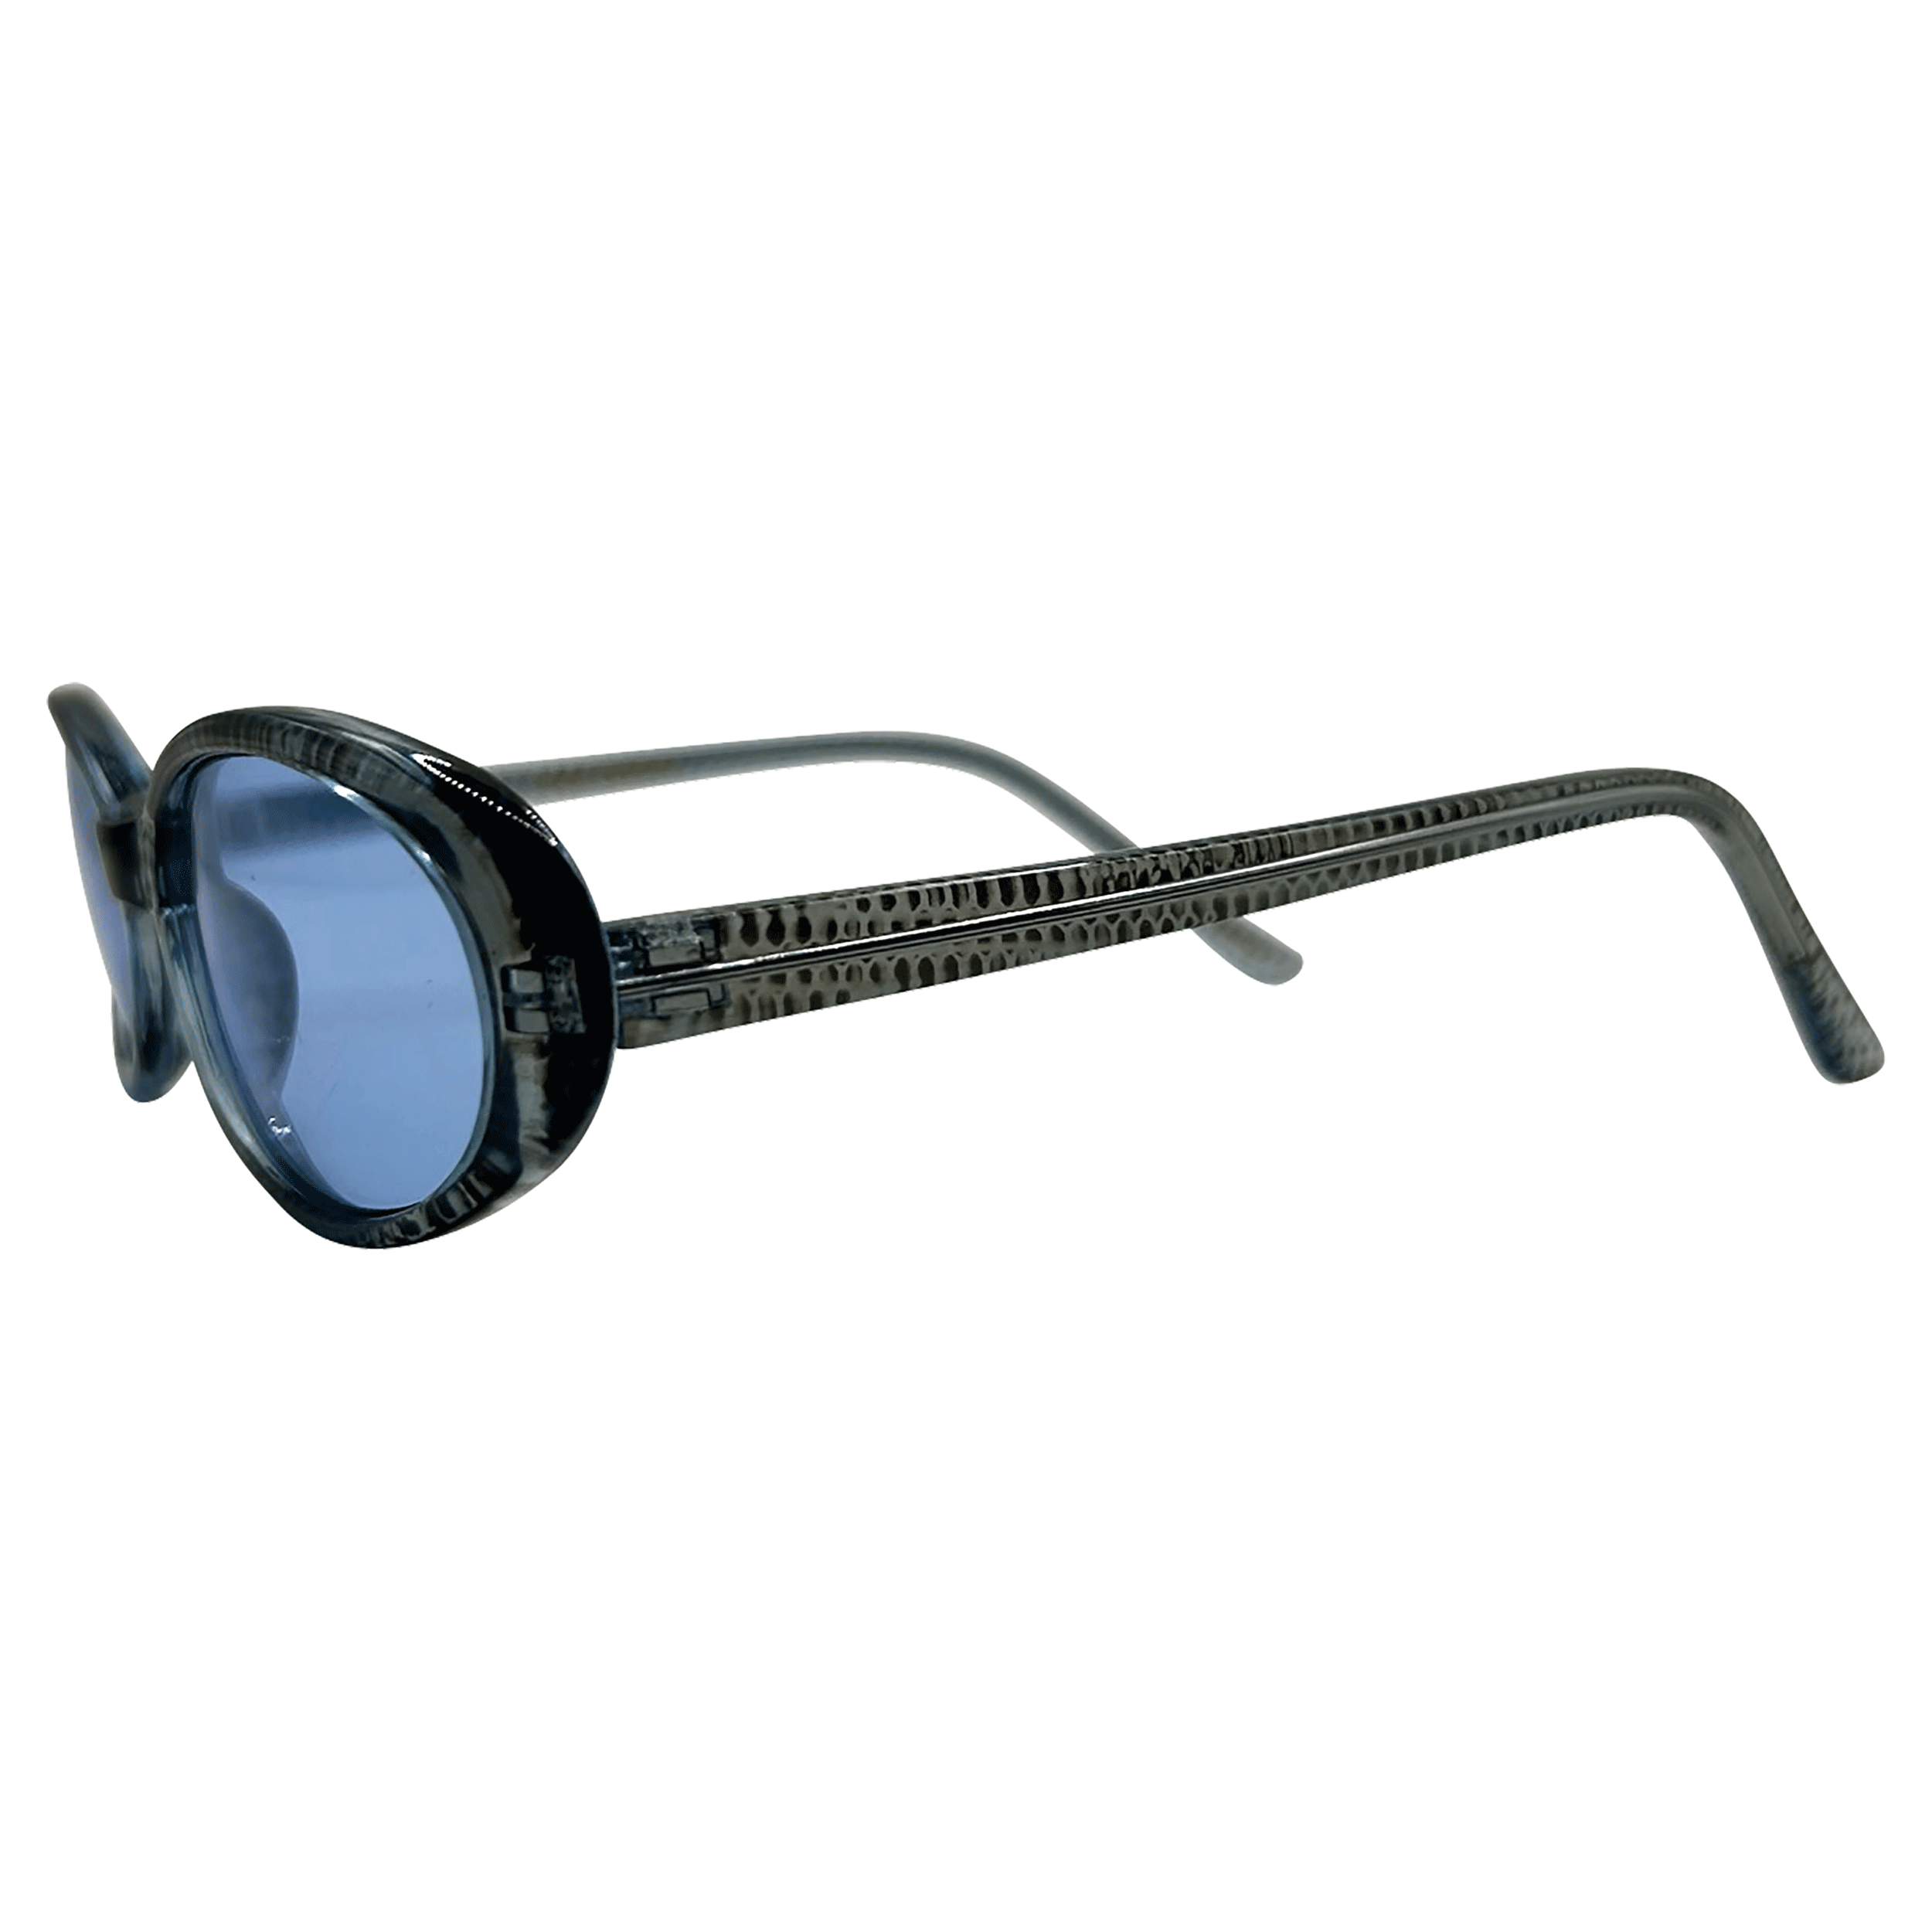 FANG Oval Vintage Sunglasses